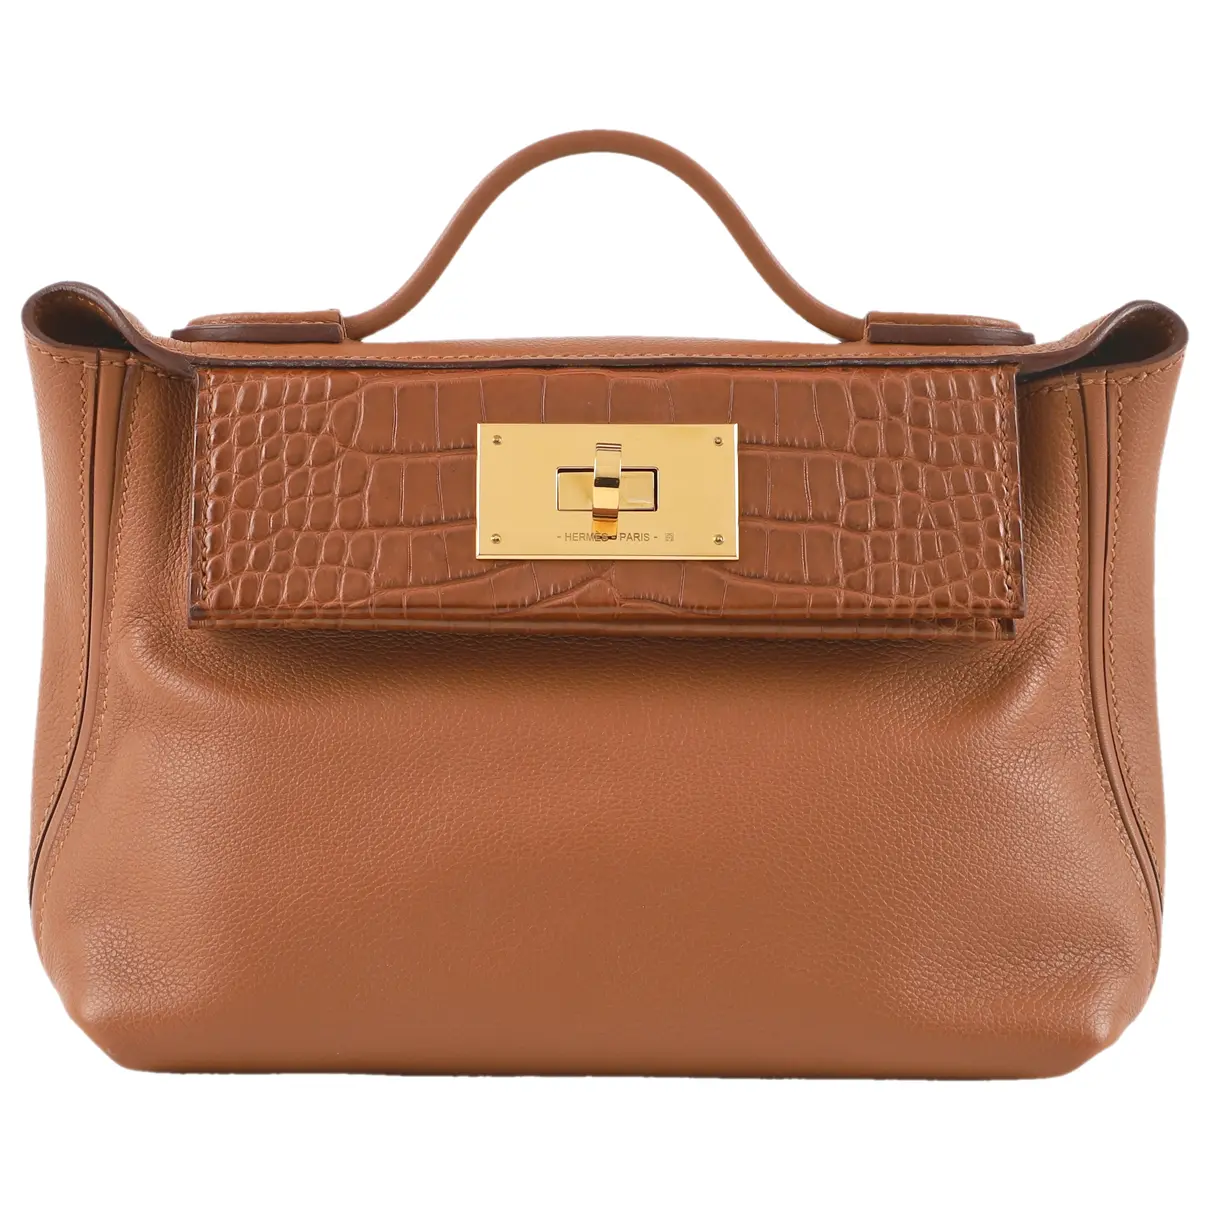 24/24 exotic leathers handbag